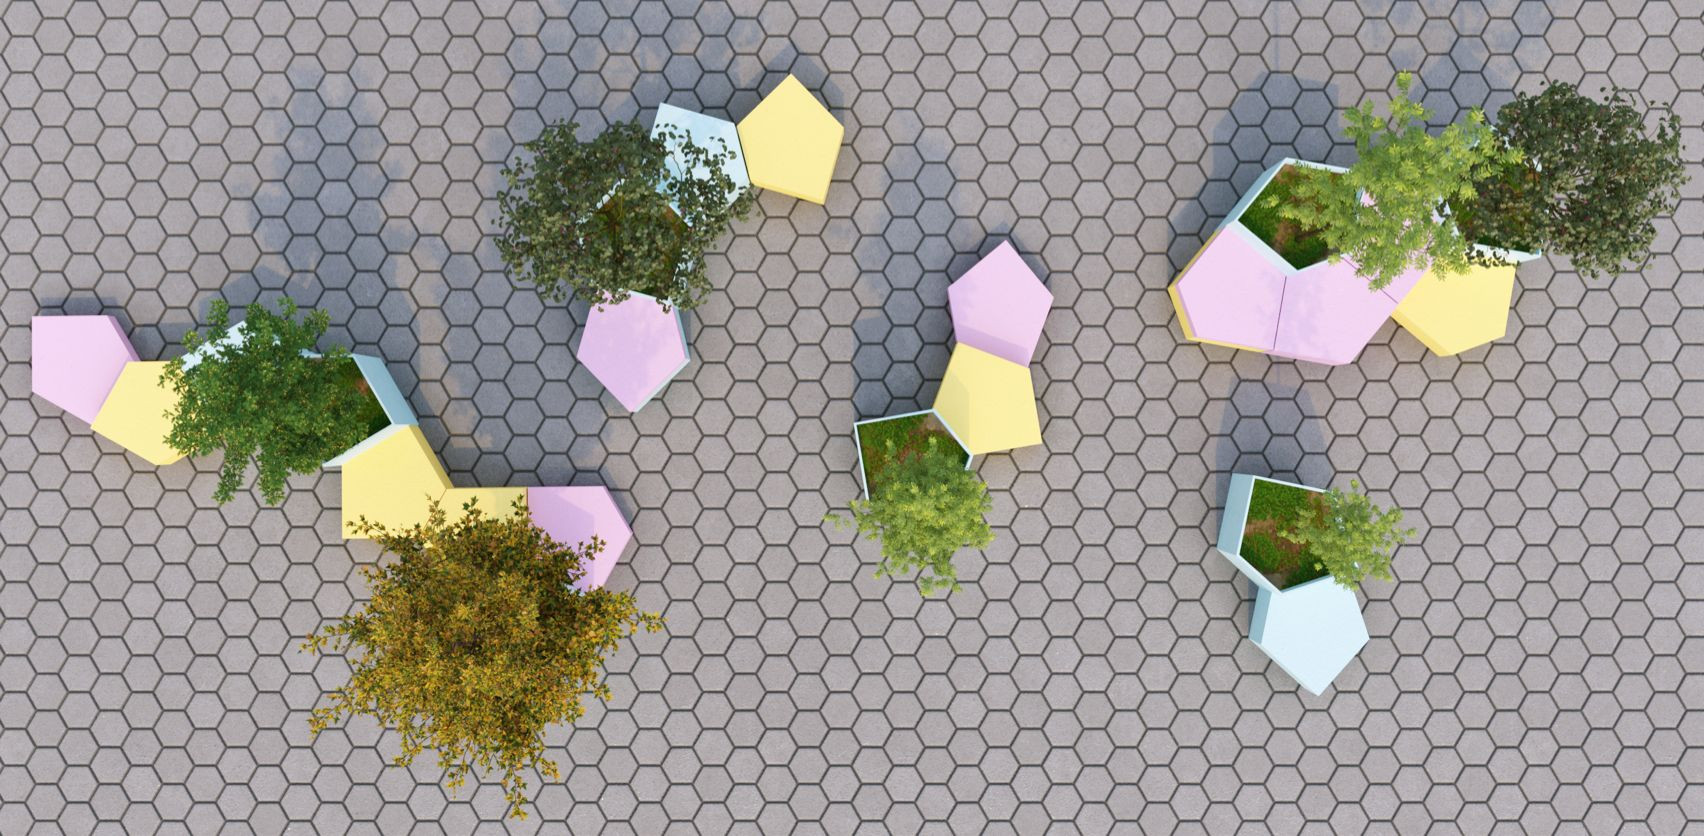 Estudiantes de Arquitectura de UIC un prototipo de mobiliario urbano flexible e inclusivo